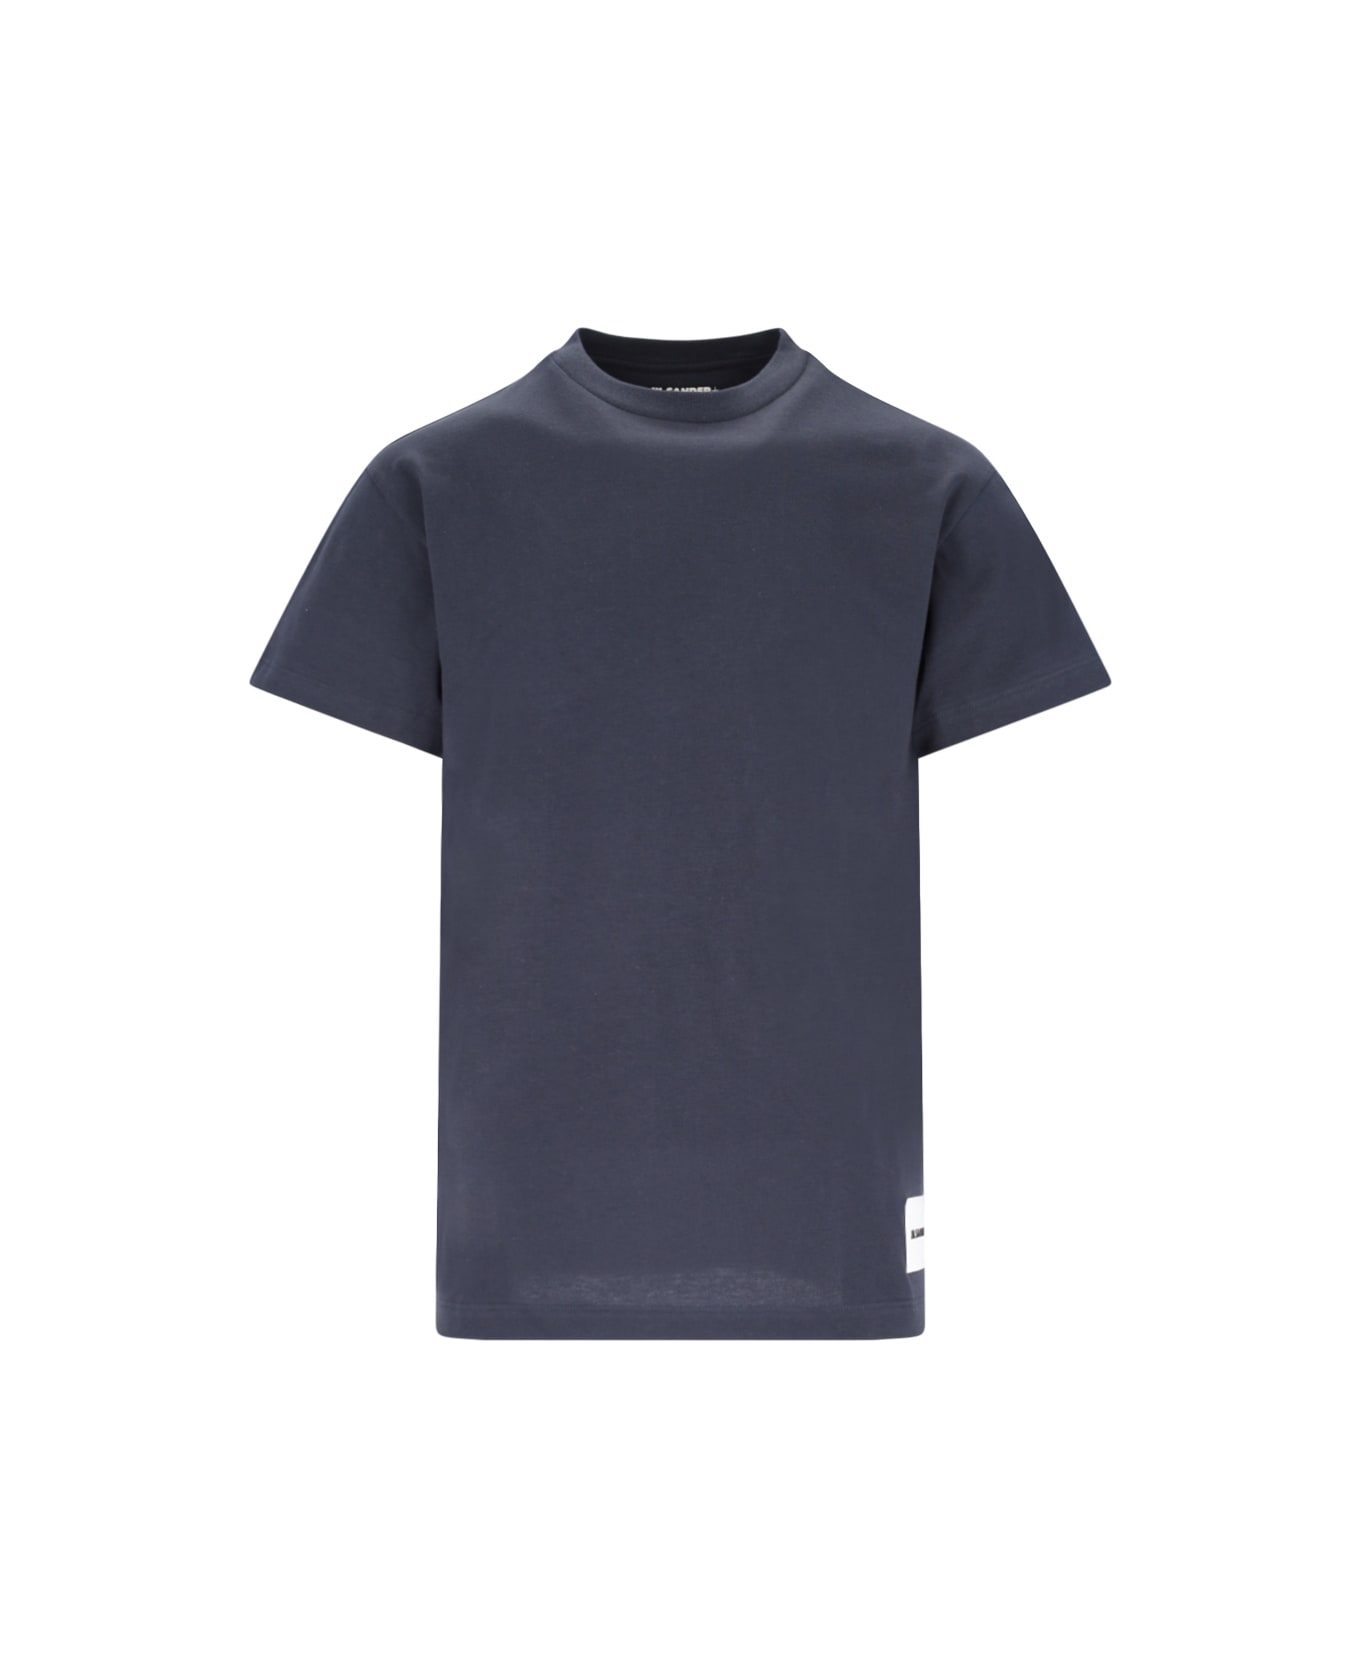 Jil Sander '3-pack' T-shirt Set - WHITE/BLACK